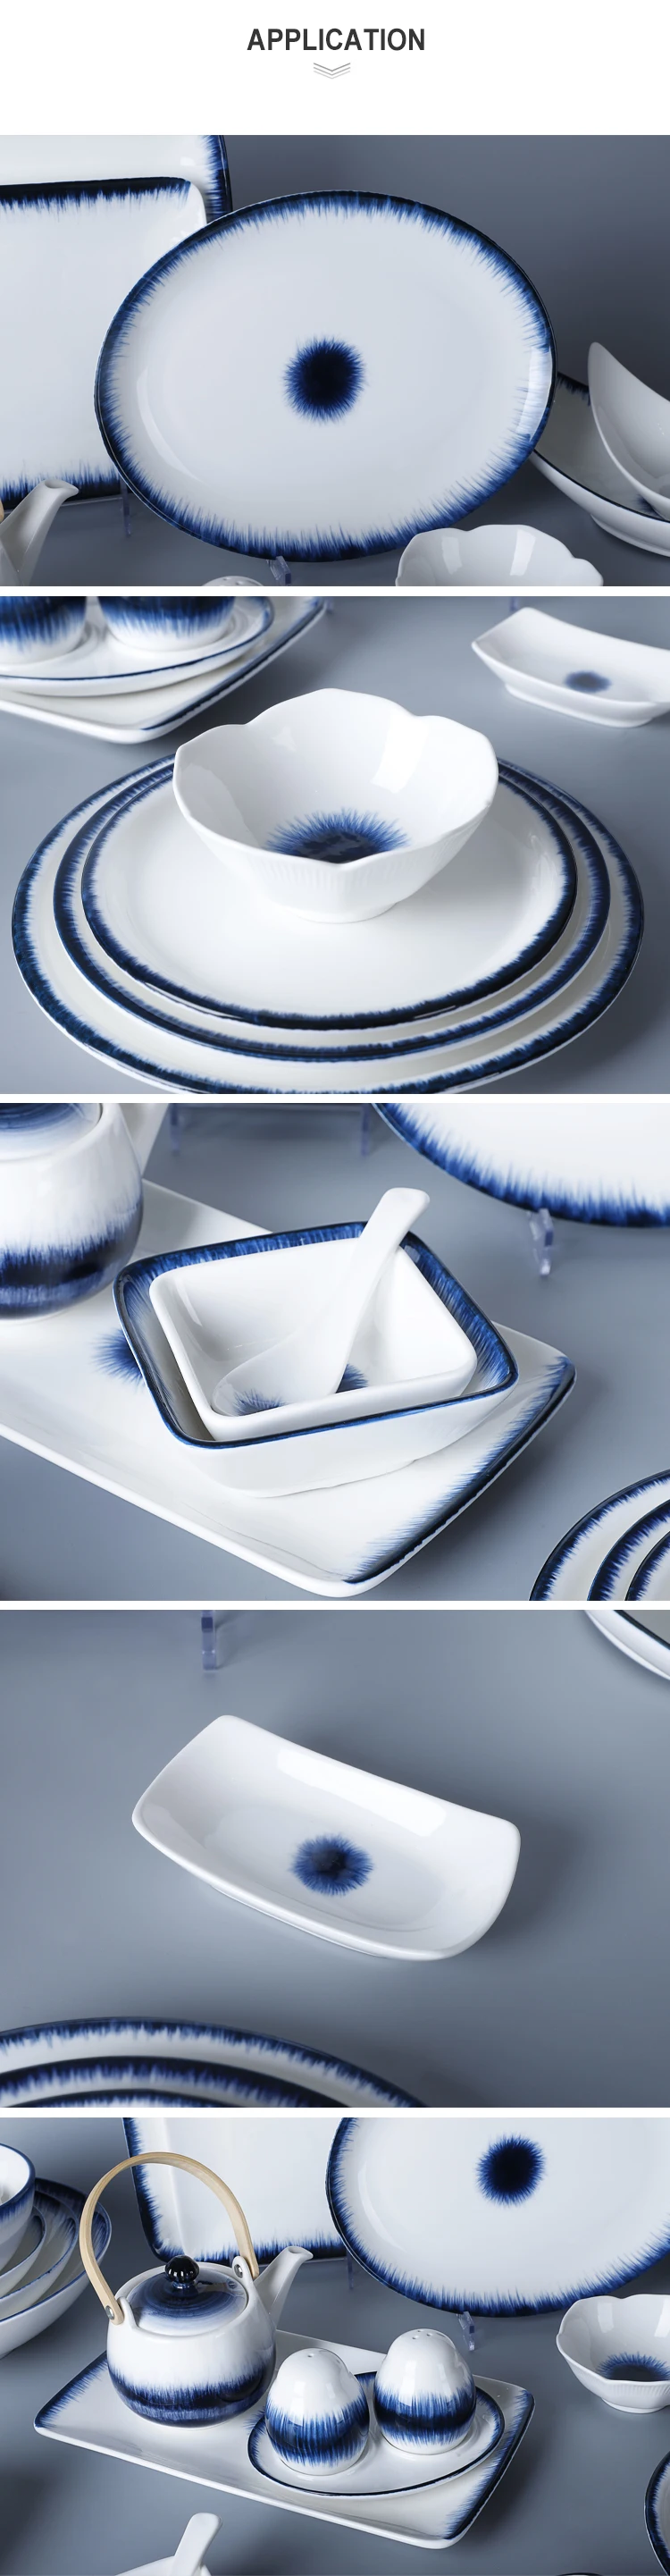 Wholesale Eco-friendly Restaurant Supplies Plates, Full Printing Porcelain Ceramics Dinnerware Porcelain Dinner Sets!